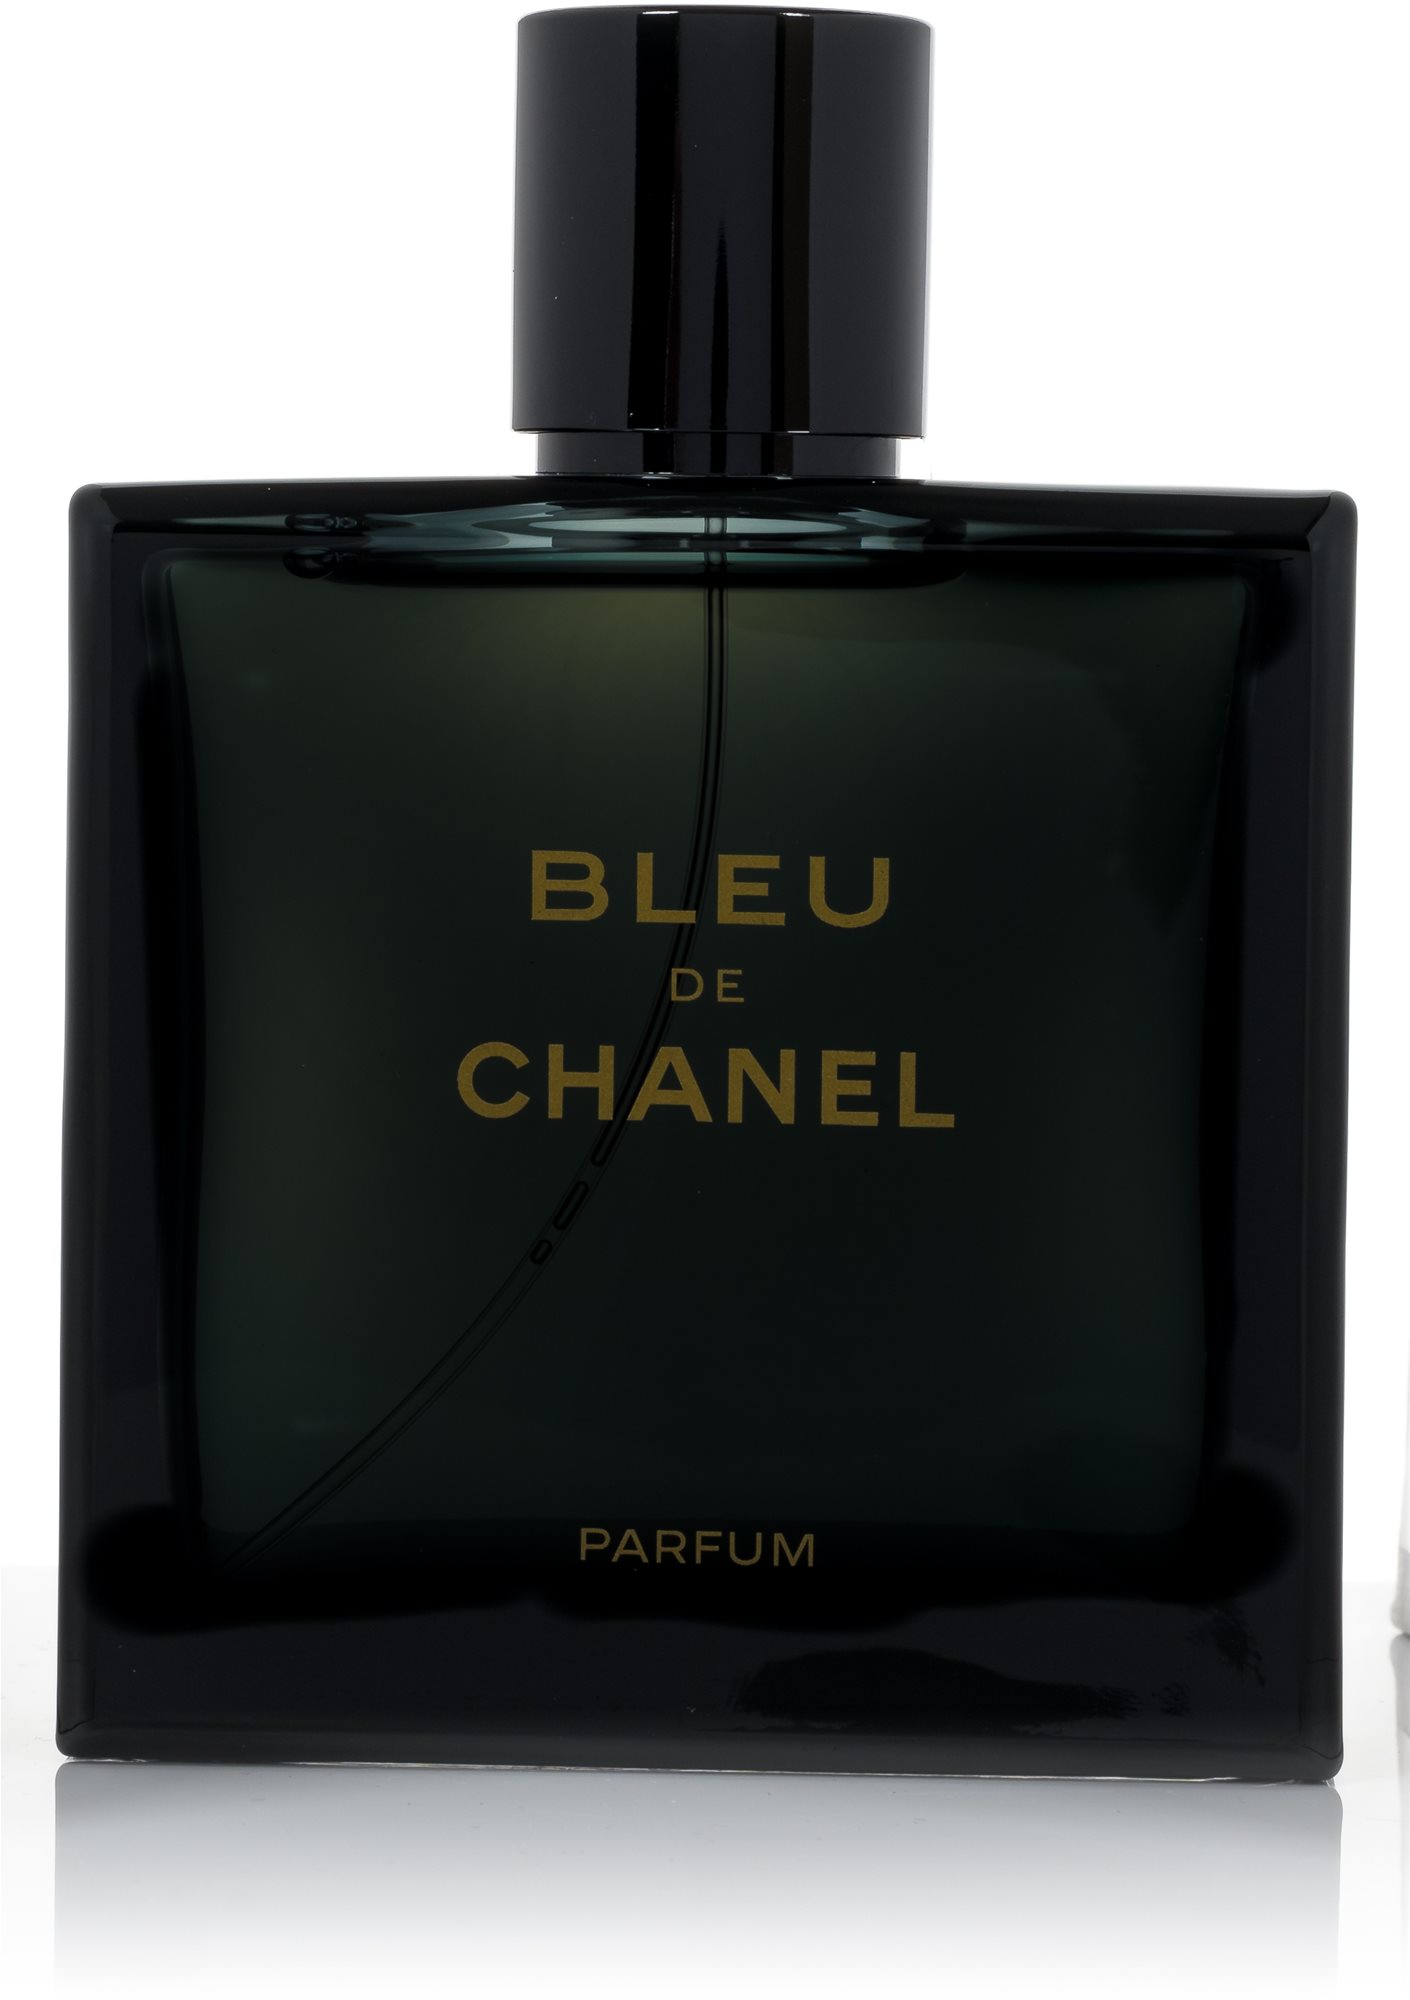 CHANEL Bleu de Chanel Parfum 100 ml